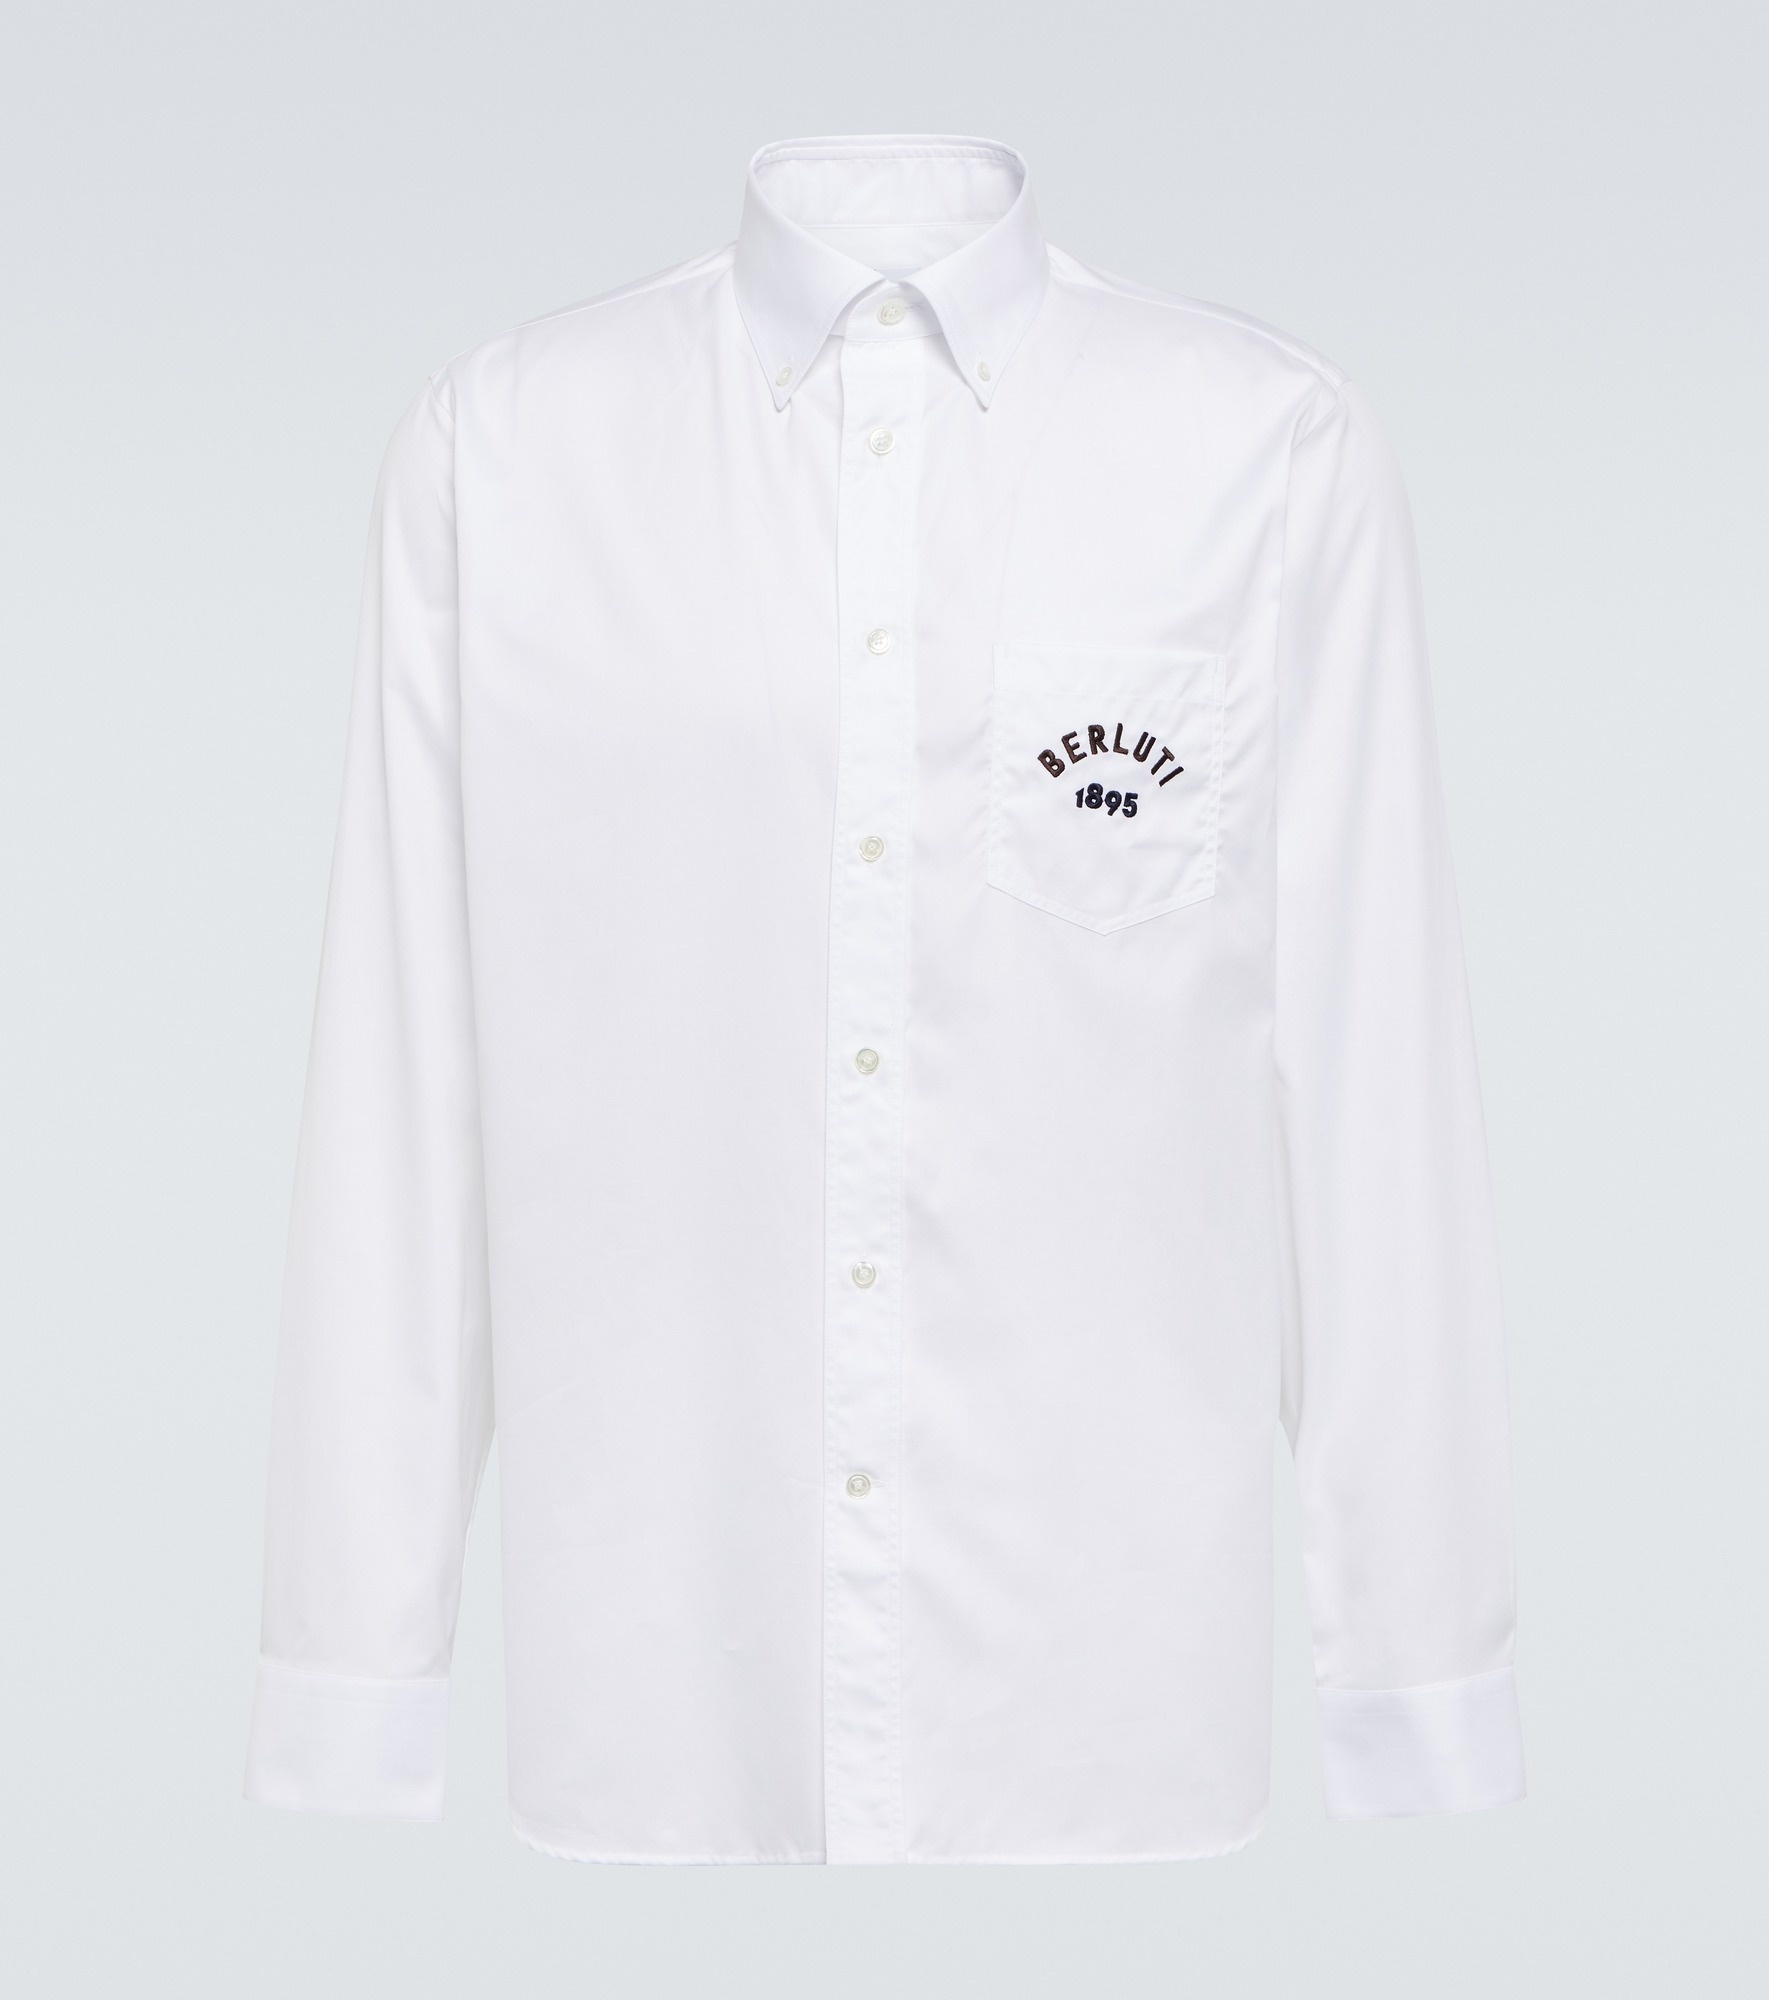 Alessandro logo cotton shirt - 1